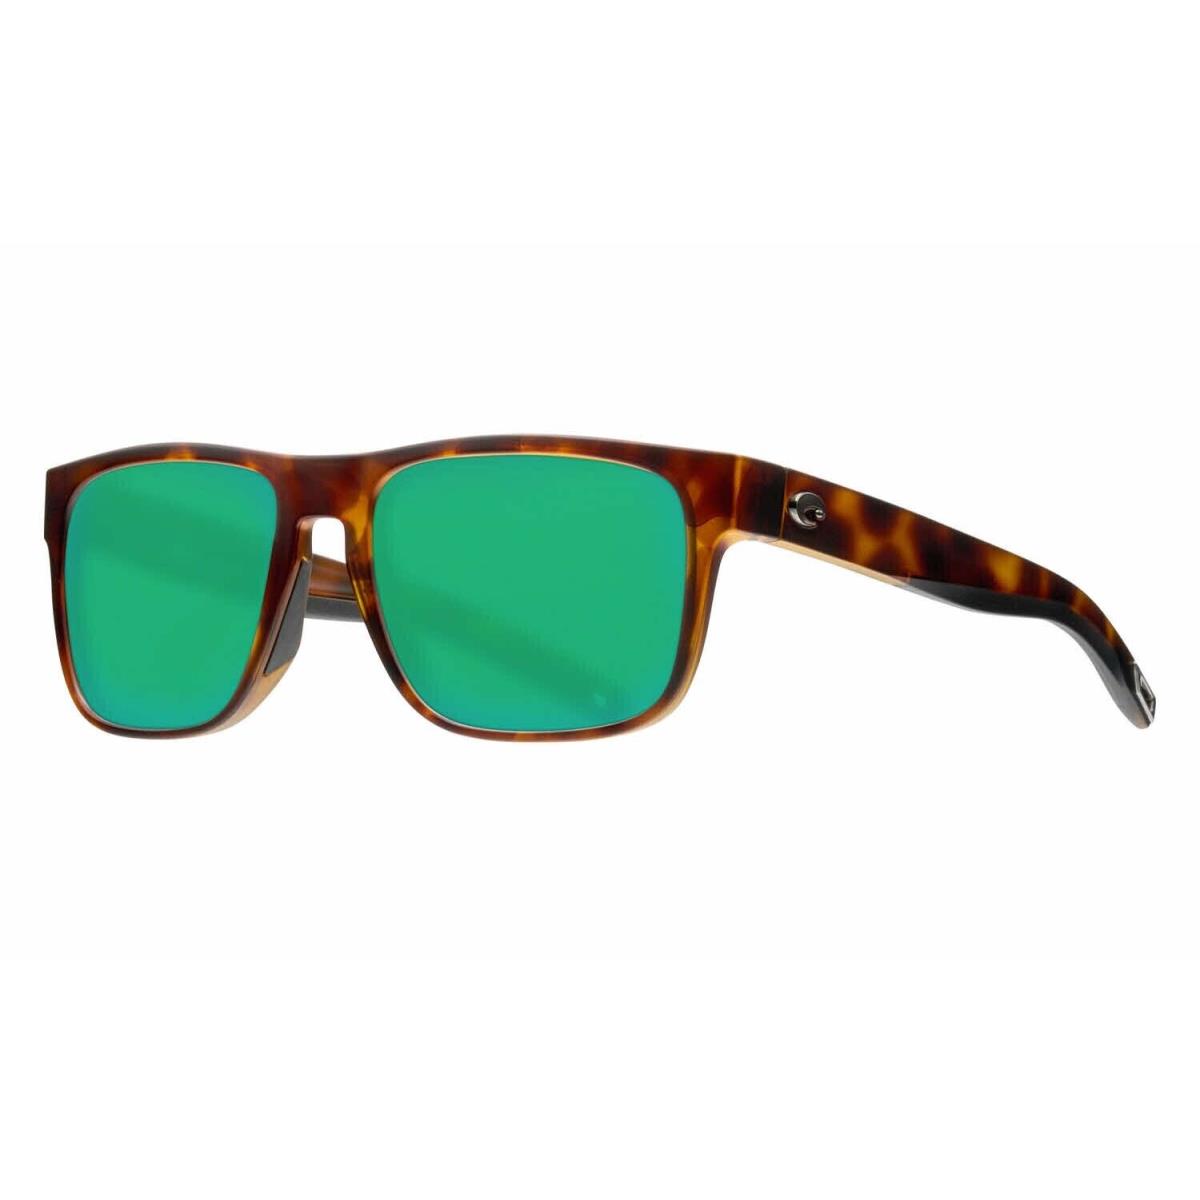 Costa Del Mar Spearo Sunglasses Matte Tortoise Frame w/ Green Mirror Glass Lens